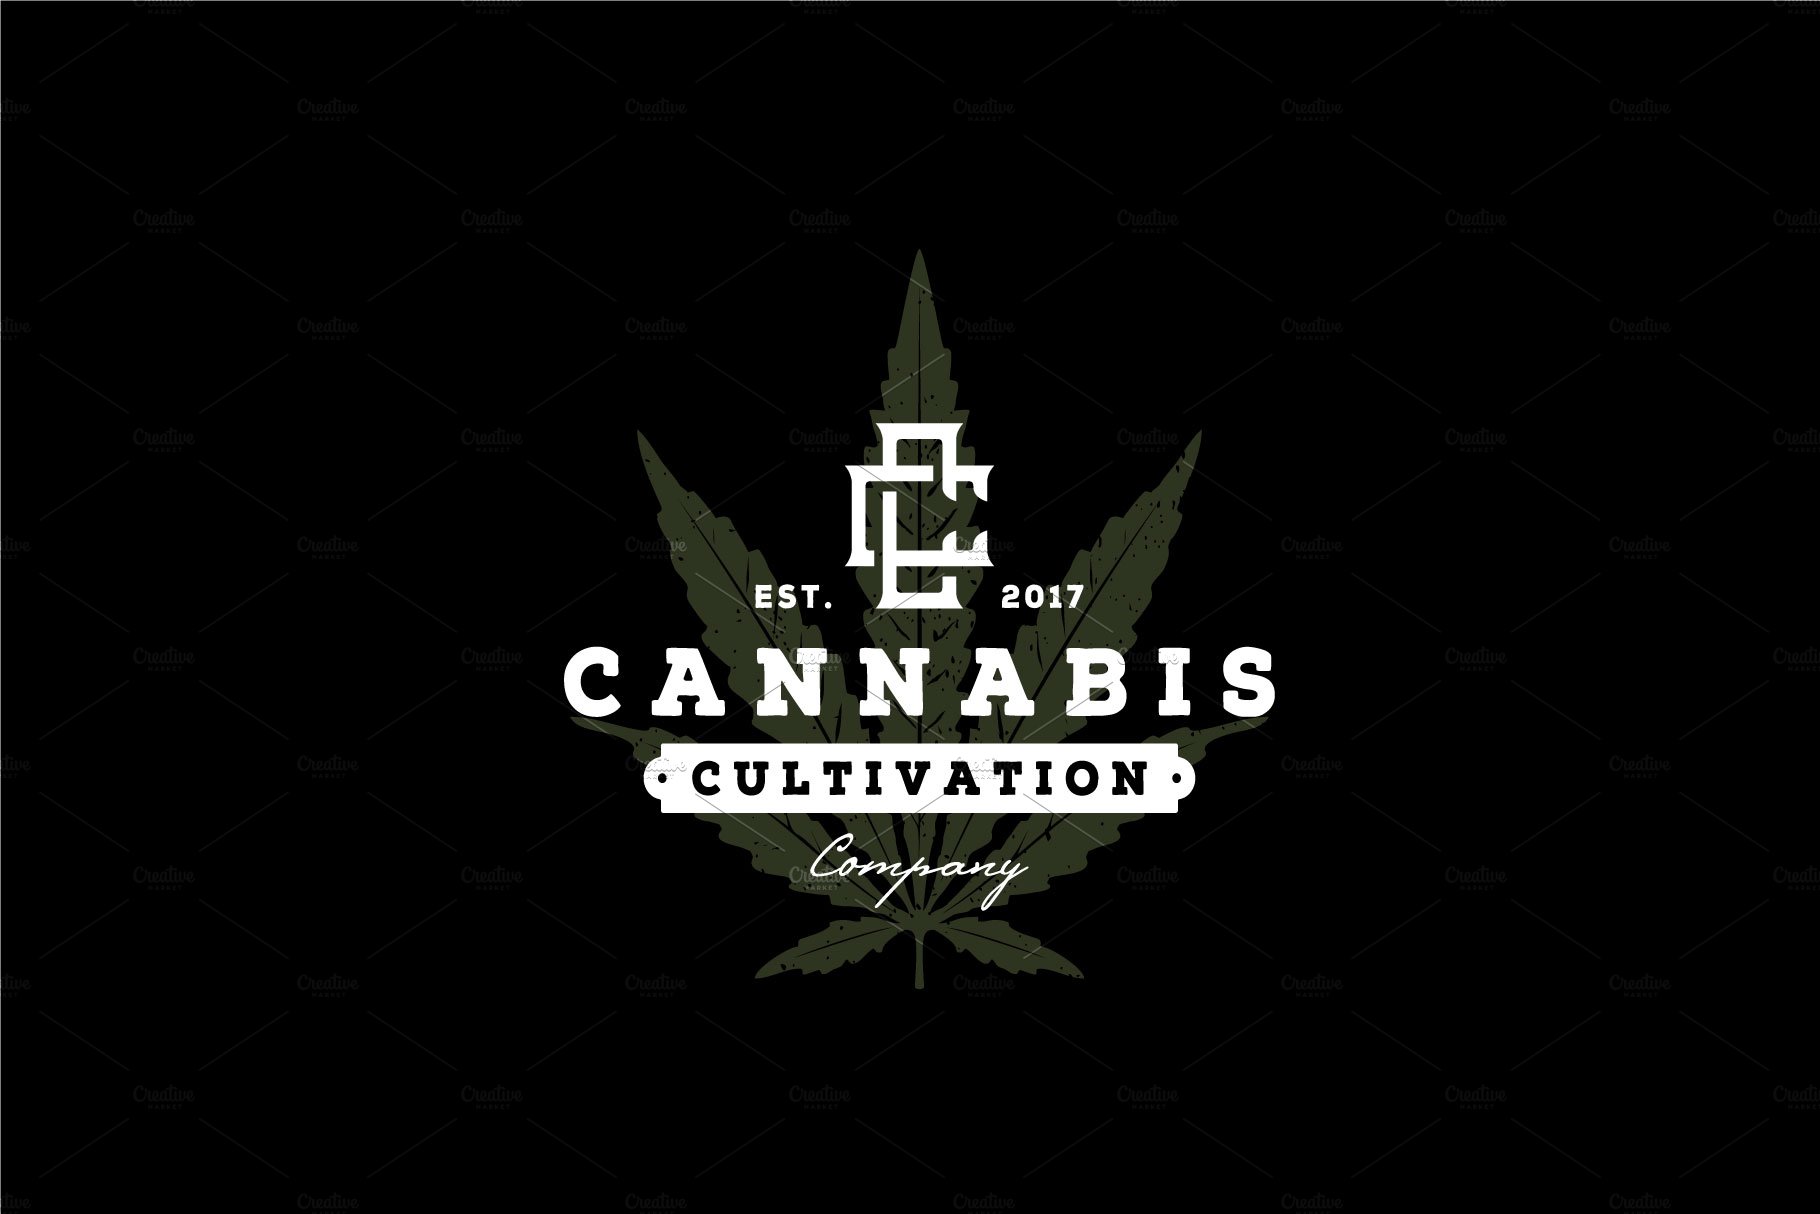 Vintage rustic cannabis cbd thc logo cover image.